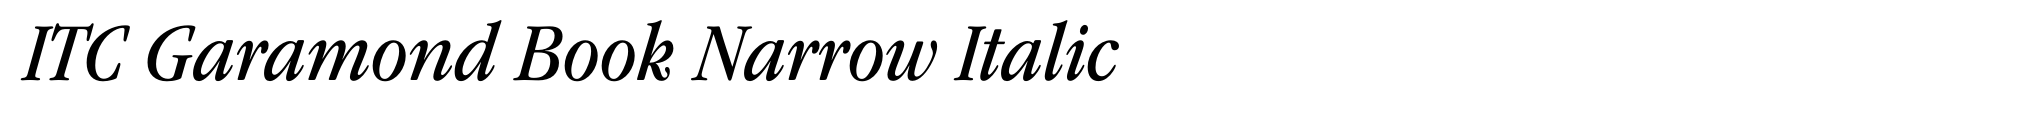 ITC Garamond Book Narrow Italic image